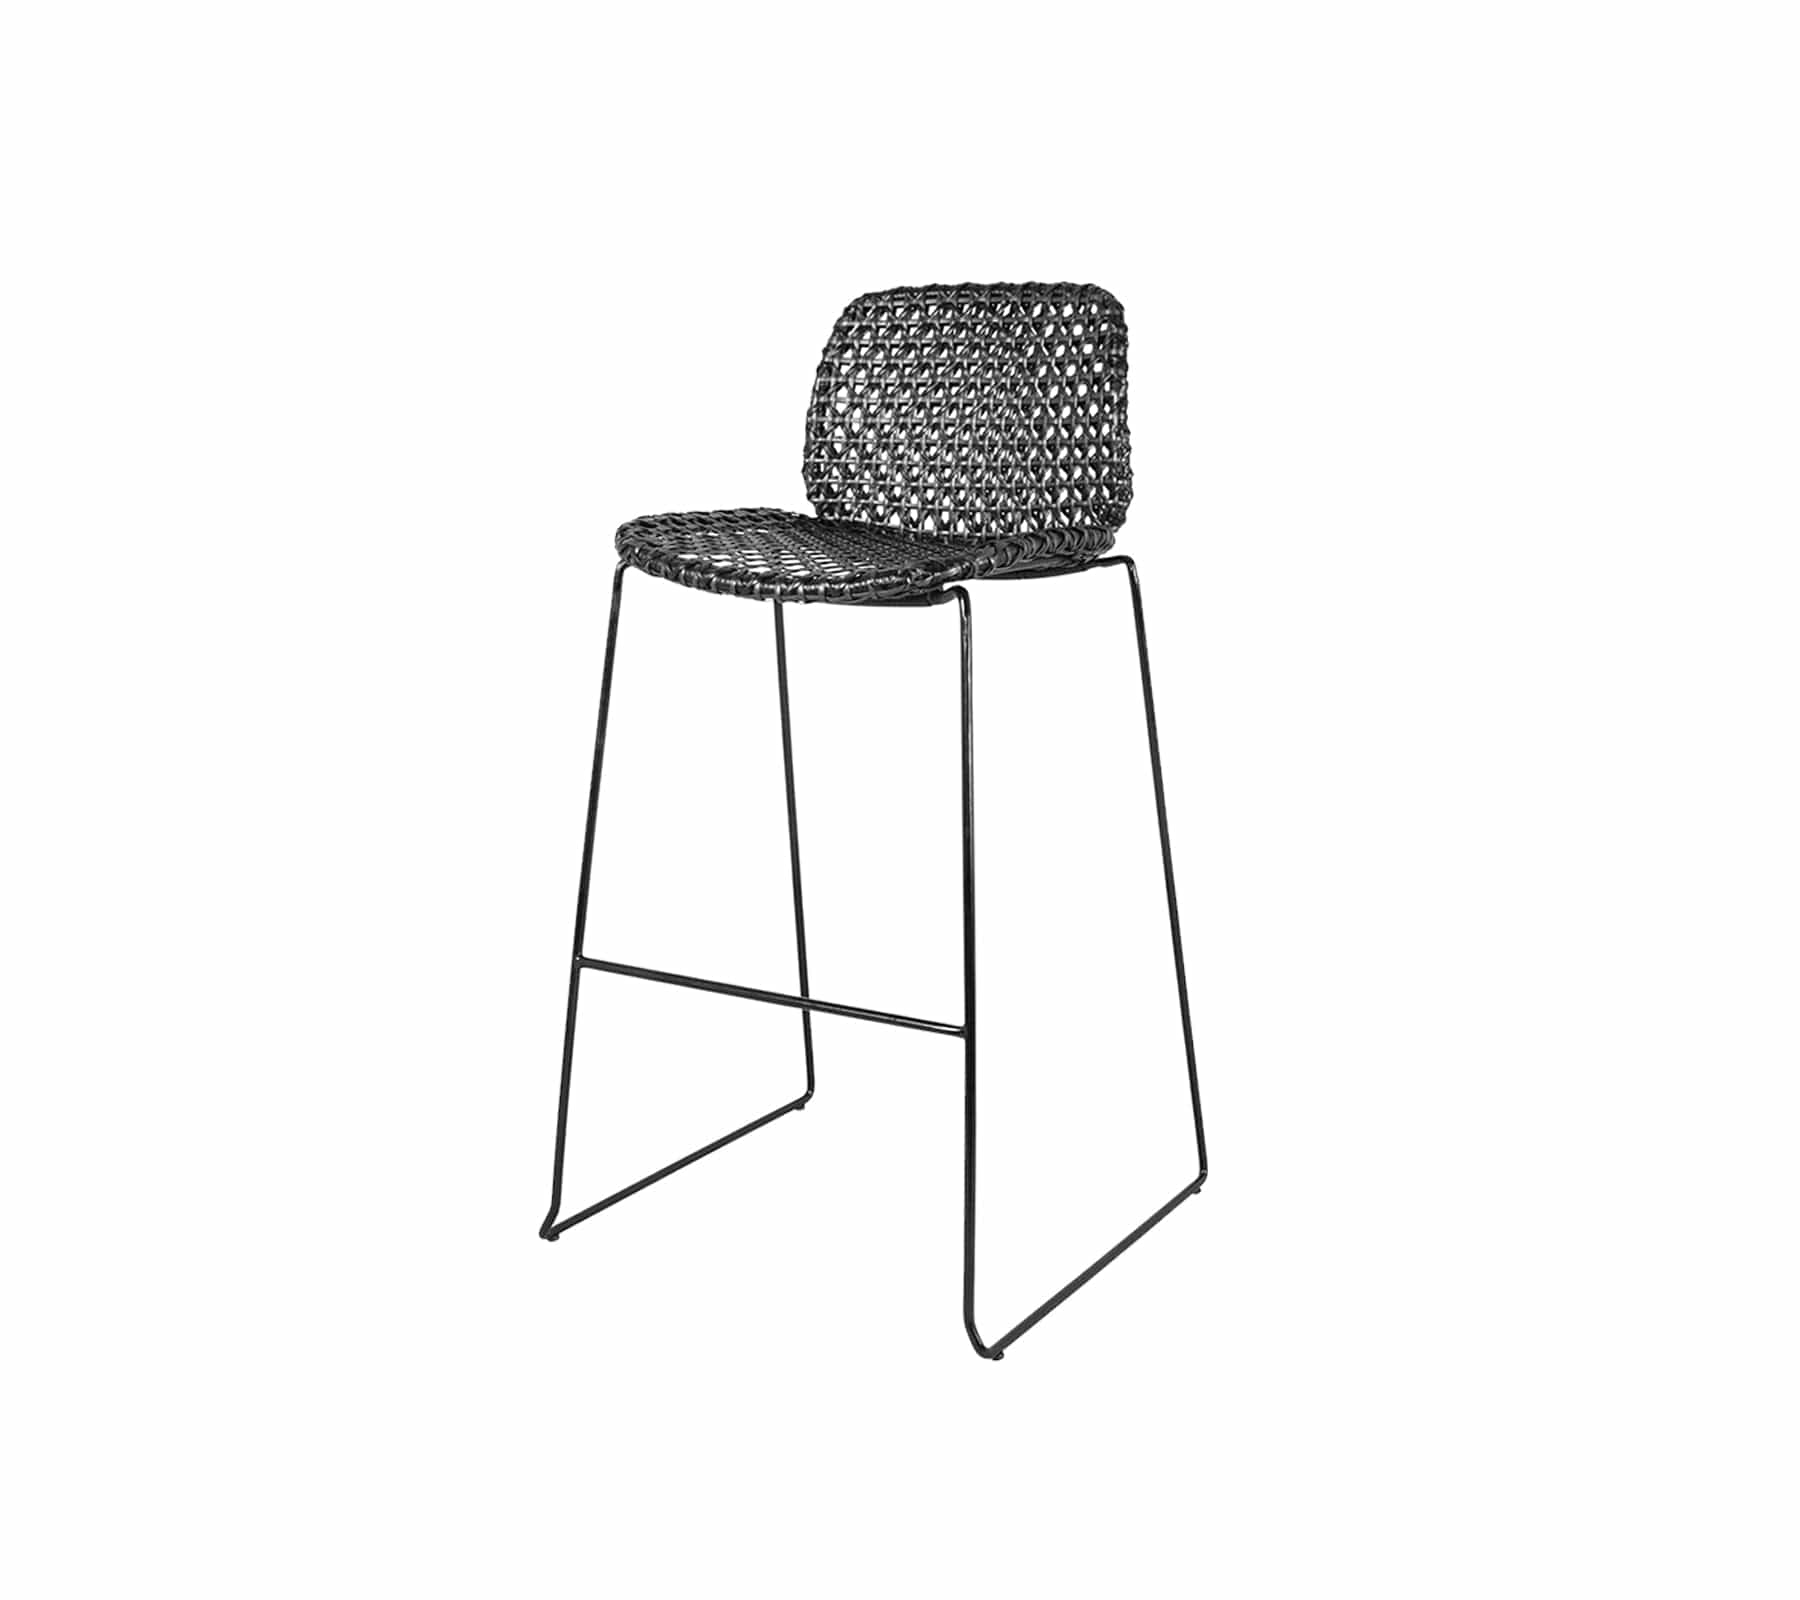 Cane-Line Denmark Cane-line Weave -  Black/Graphite Vibe bar chair, stackable (54106)